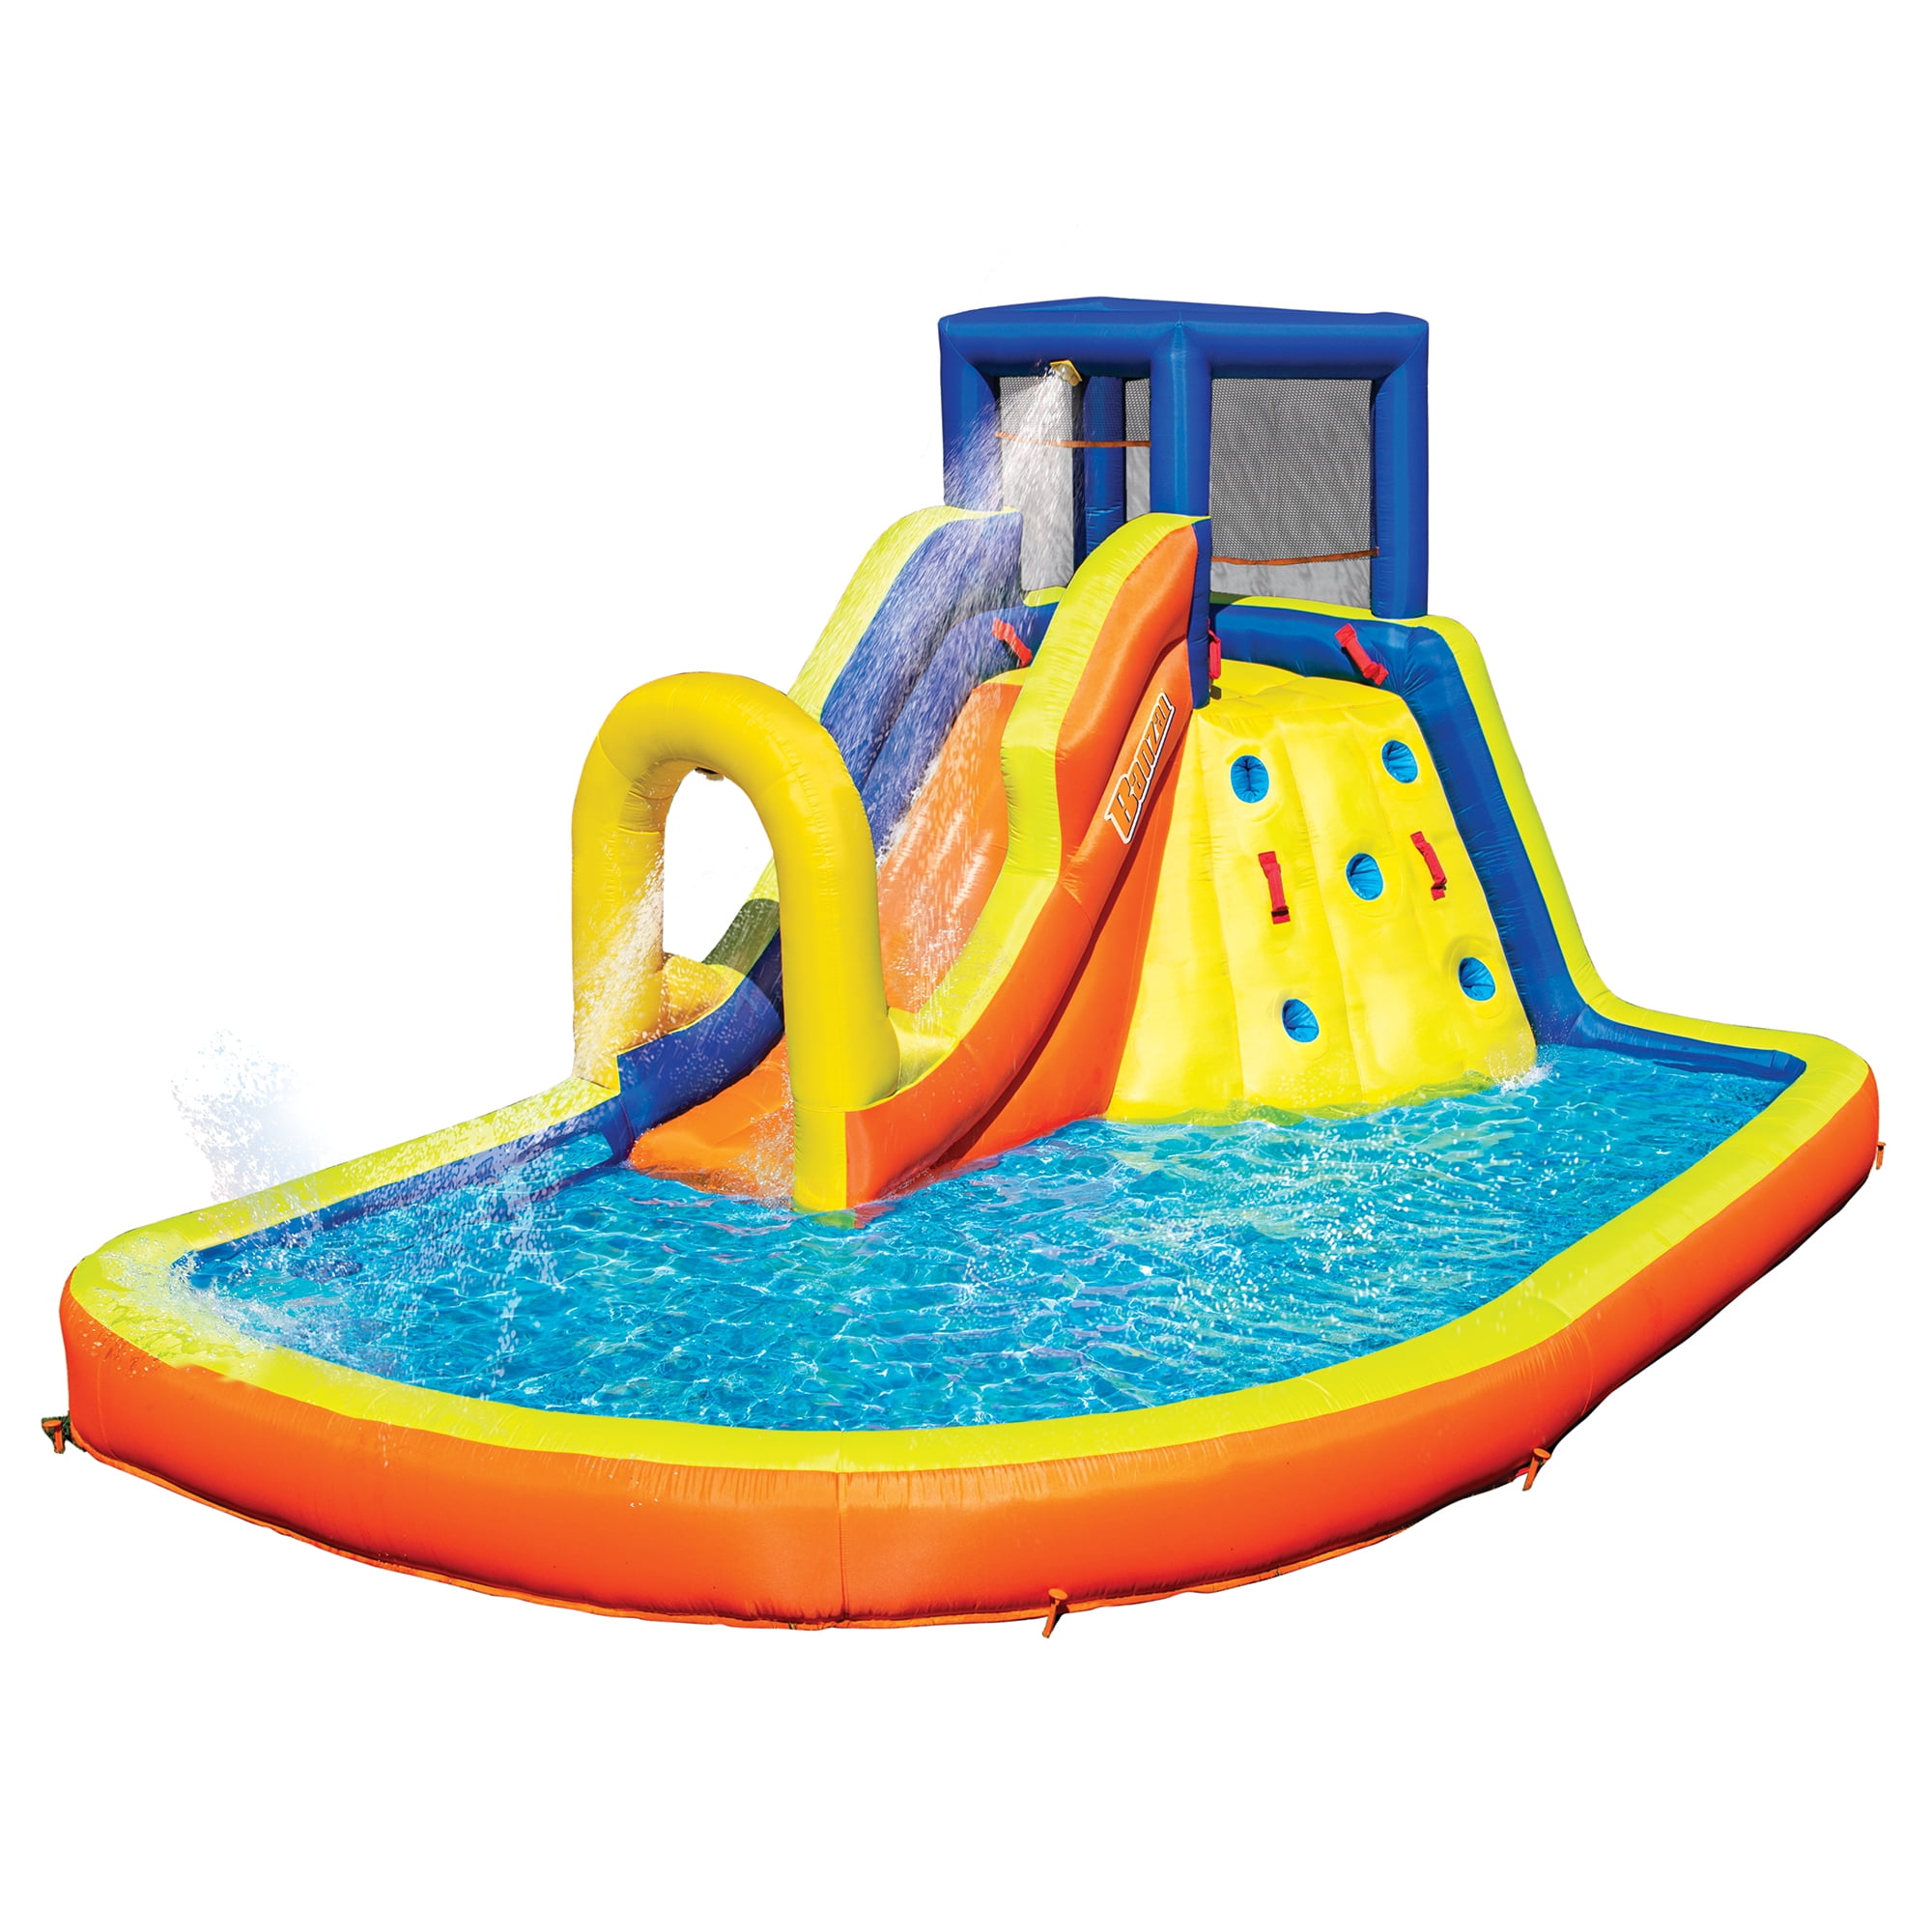 Kids Inflatable Water Slip and Slide Childrens Fun Summer Outdoor Garden Play 